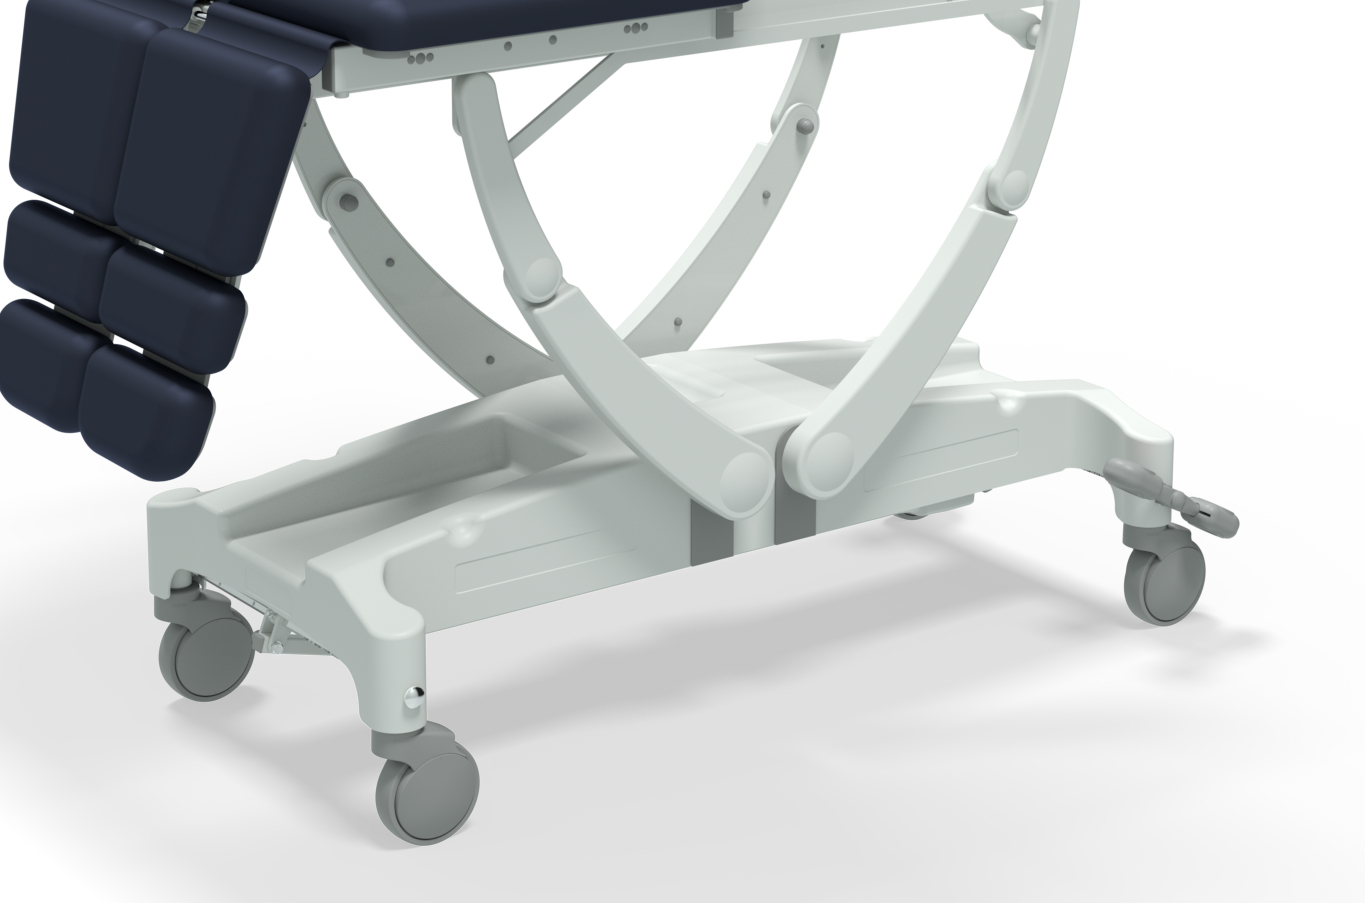 frein centralisé sur châssis premium fauteuil podologie pedicurie seers medical tablelya NV0695-PRM